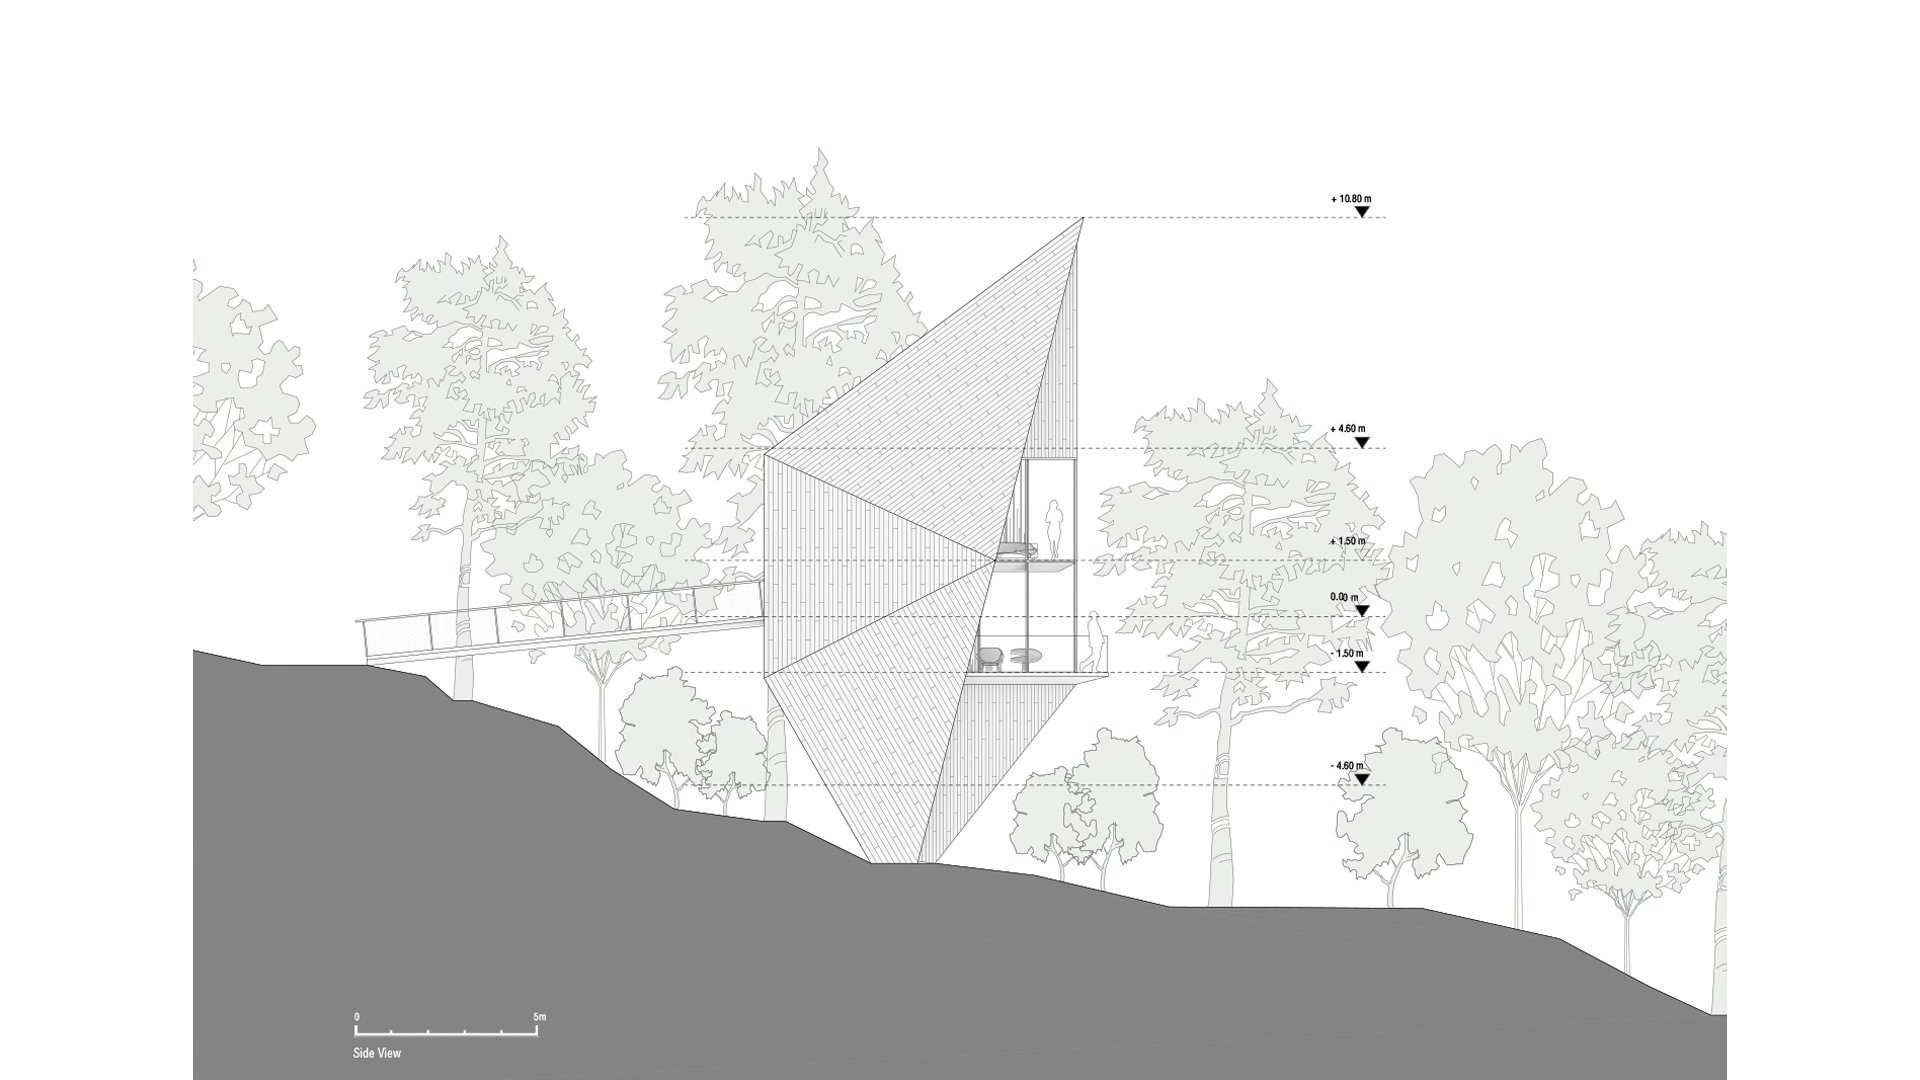 26_Peter_Pichler_Architecture_Tree_Houses_medium_9.jpeg